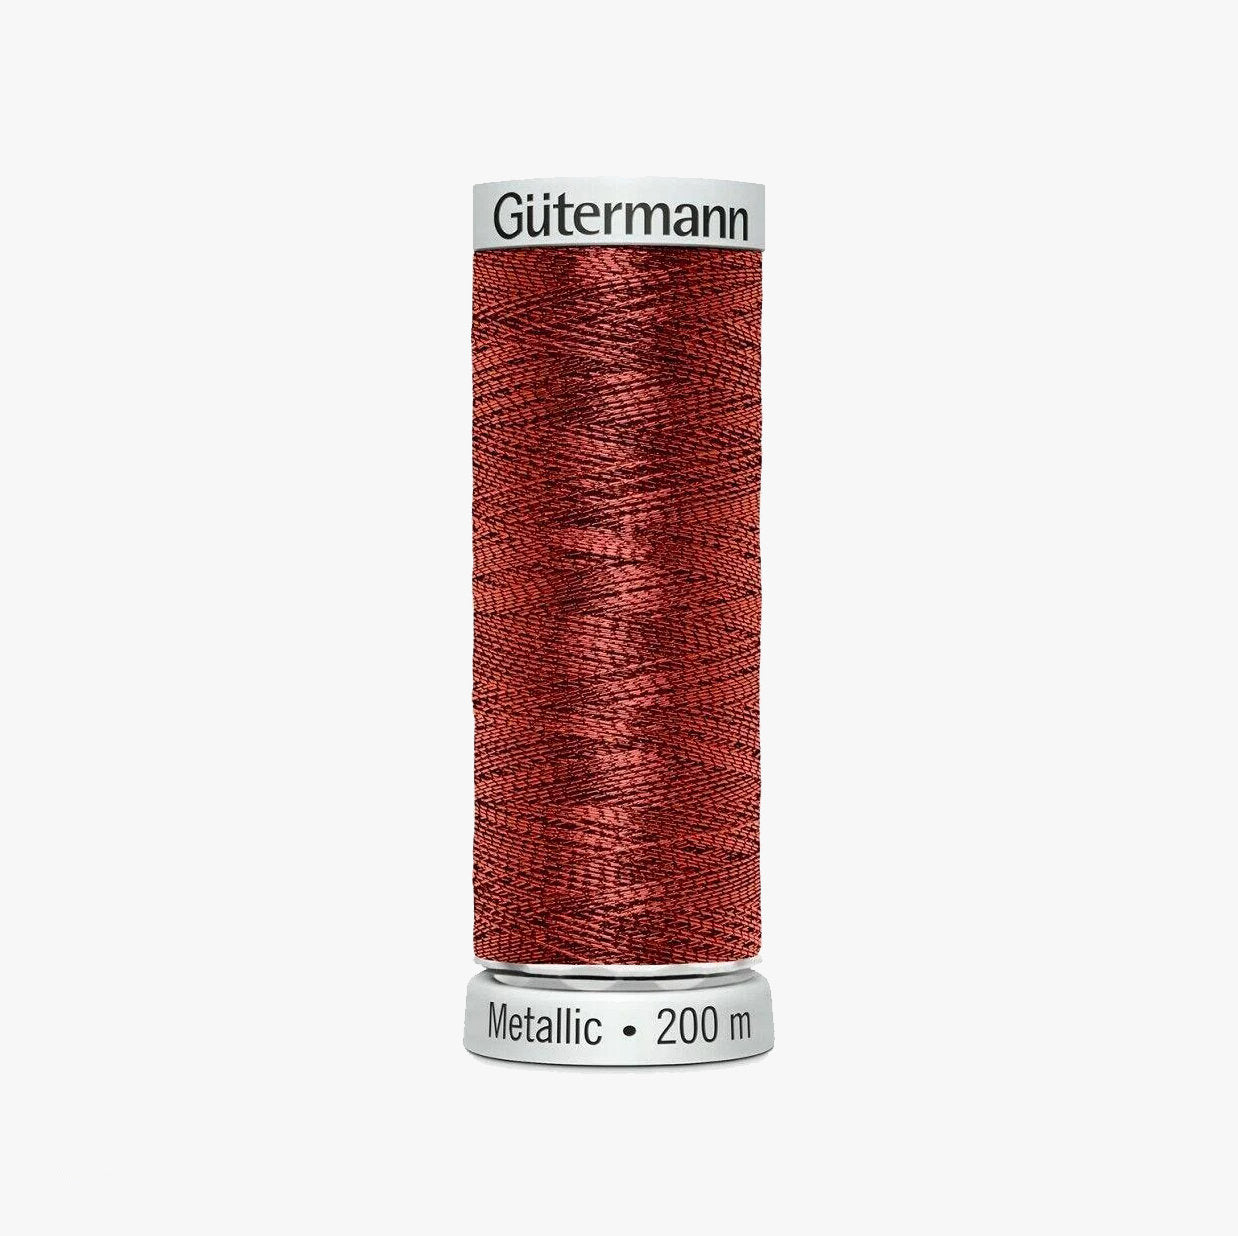 7014 Gutermann Metallic Thread 200m - Metallic Effect for Decorative Seams and Machine Embroidery